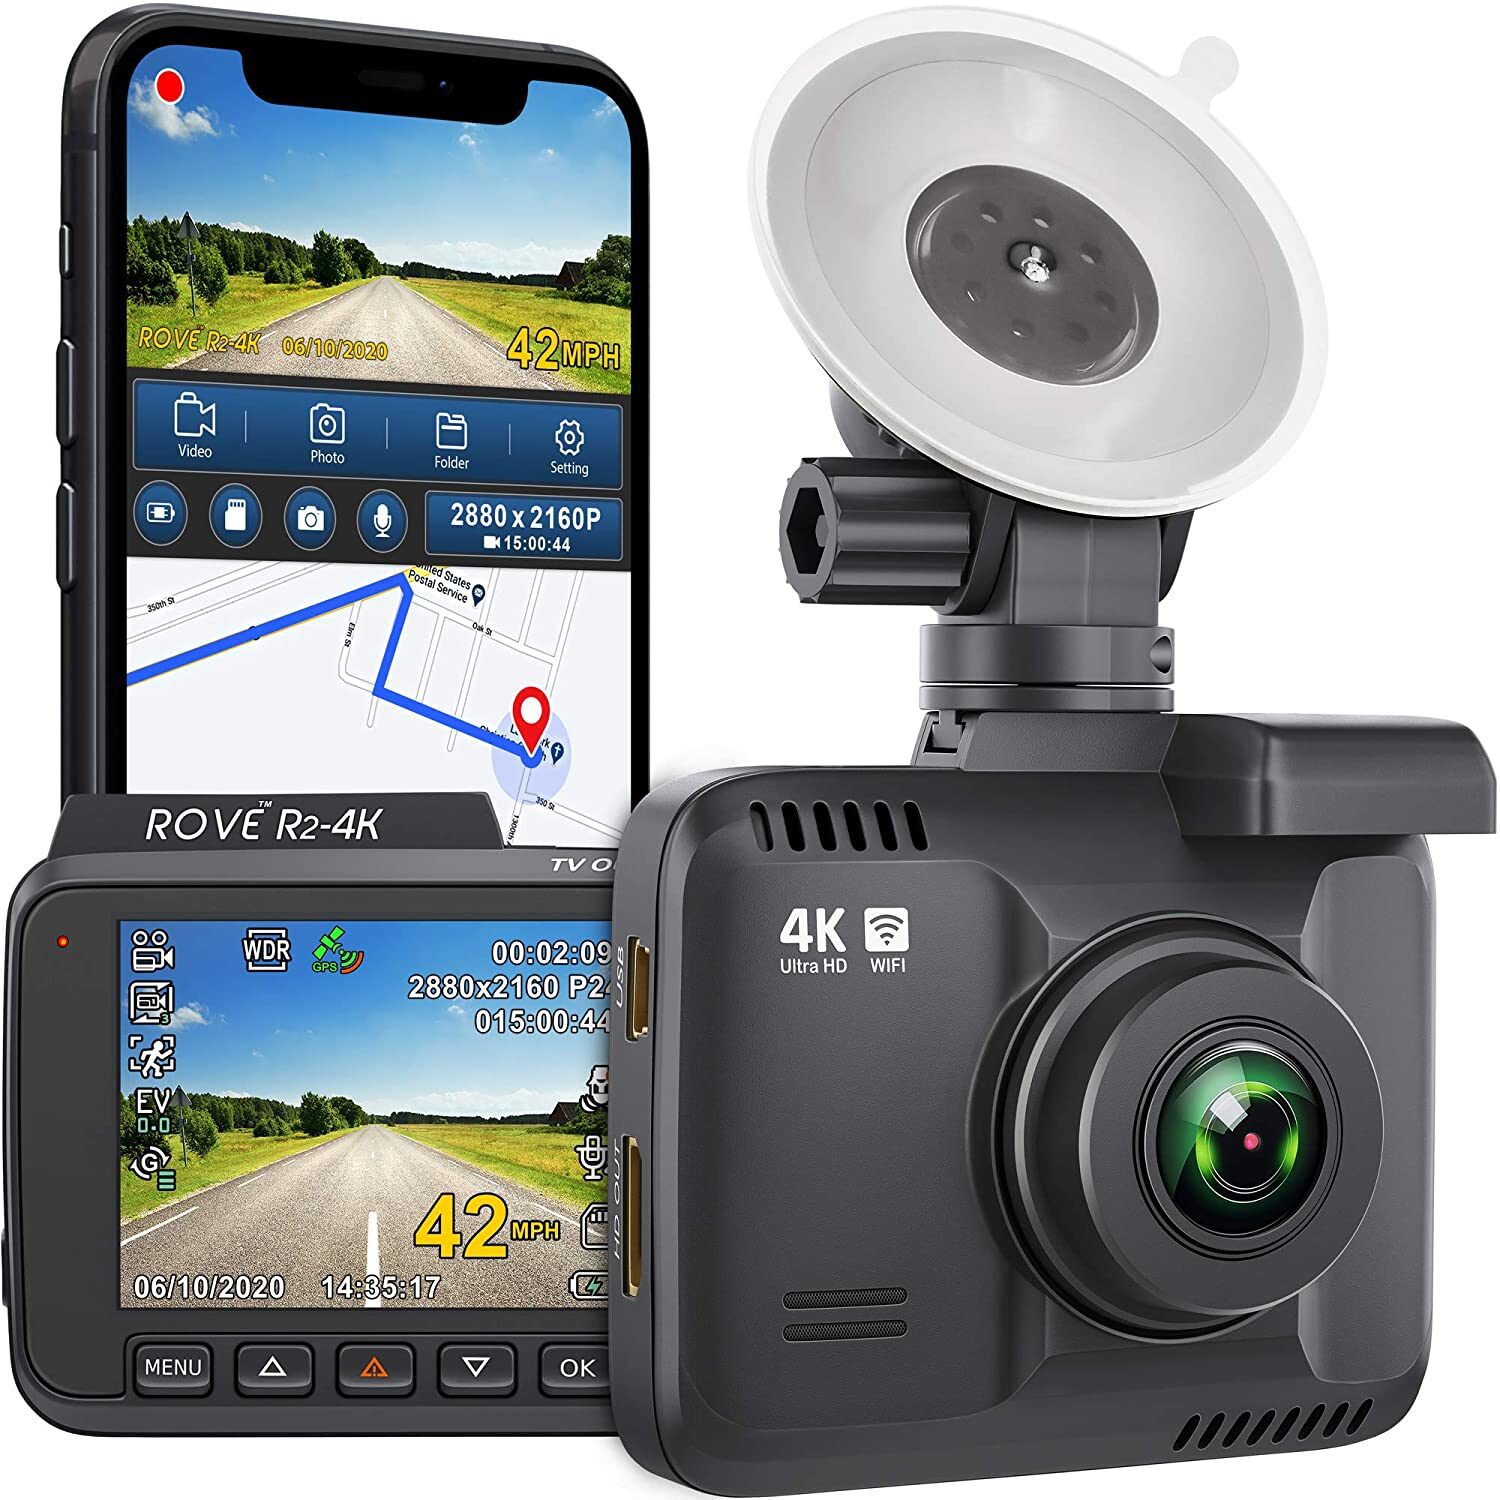 https://cyberguy.com/wp-content/uploads/2022/02/Rove-R2-4K-Dash-Cam-Built-in-WiFi-GPS-Car-Dashboard-Camera-Recorder-1500x1500.jpg